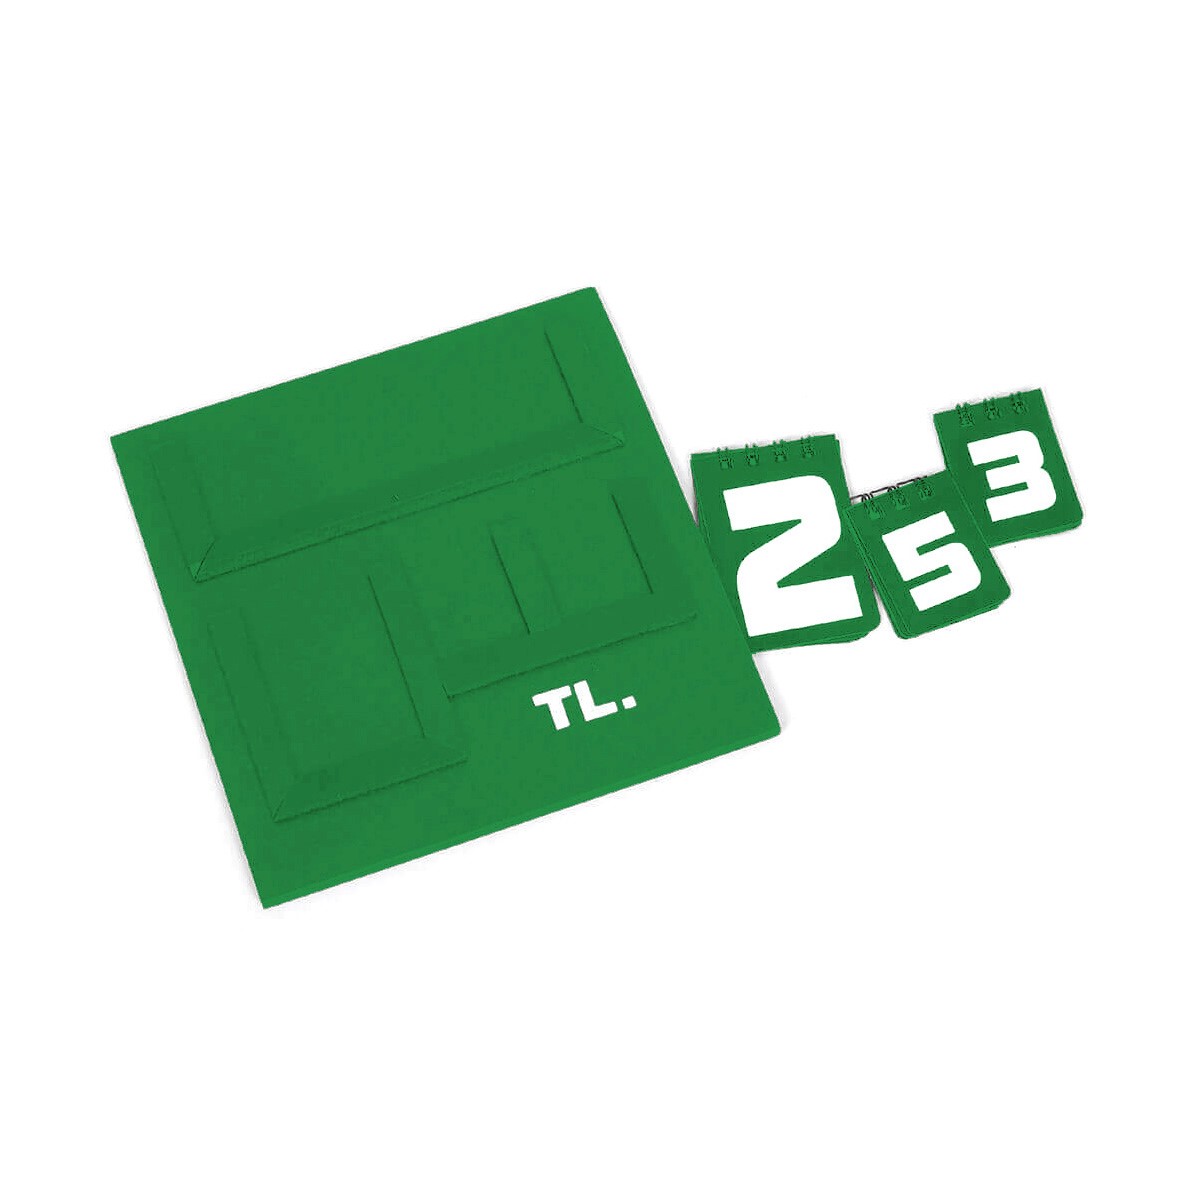 Yazılı Manav Etiketi Mini Tek Taraflı 11x13,5 cm Yeşil.jpg (75 KB)